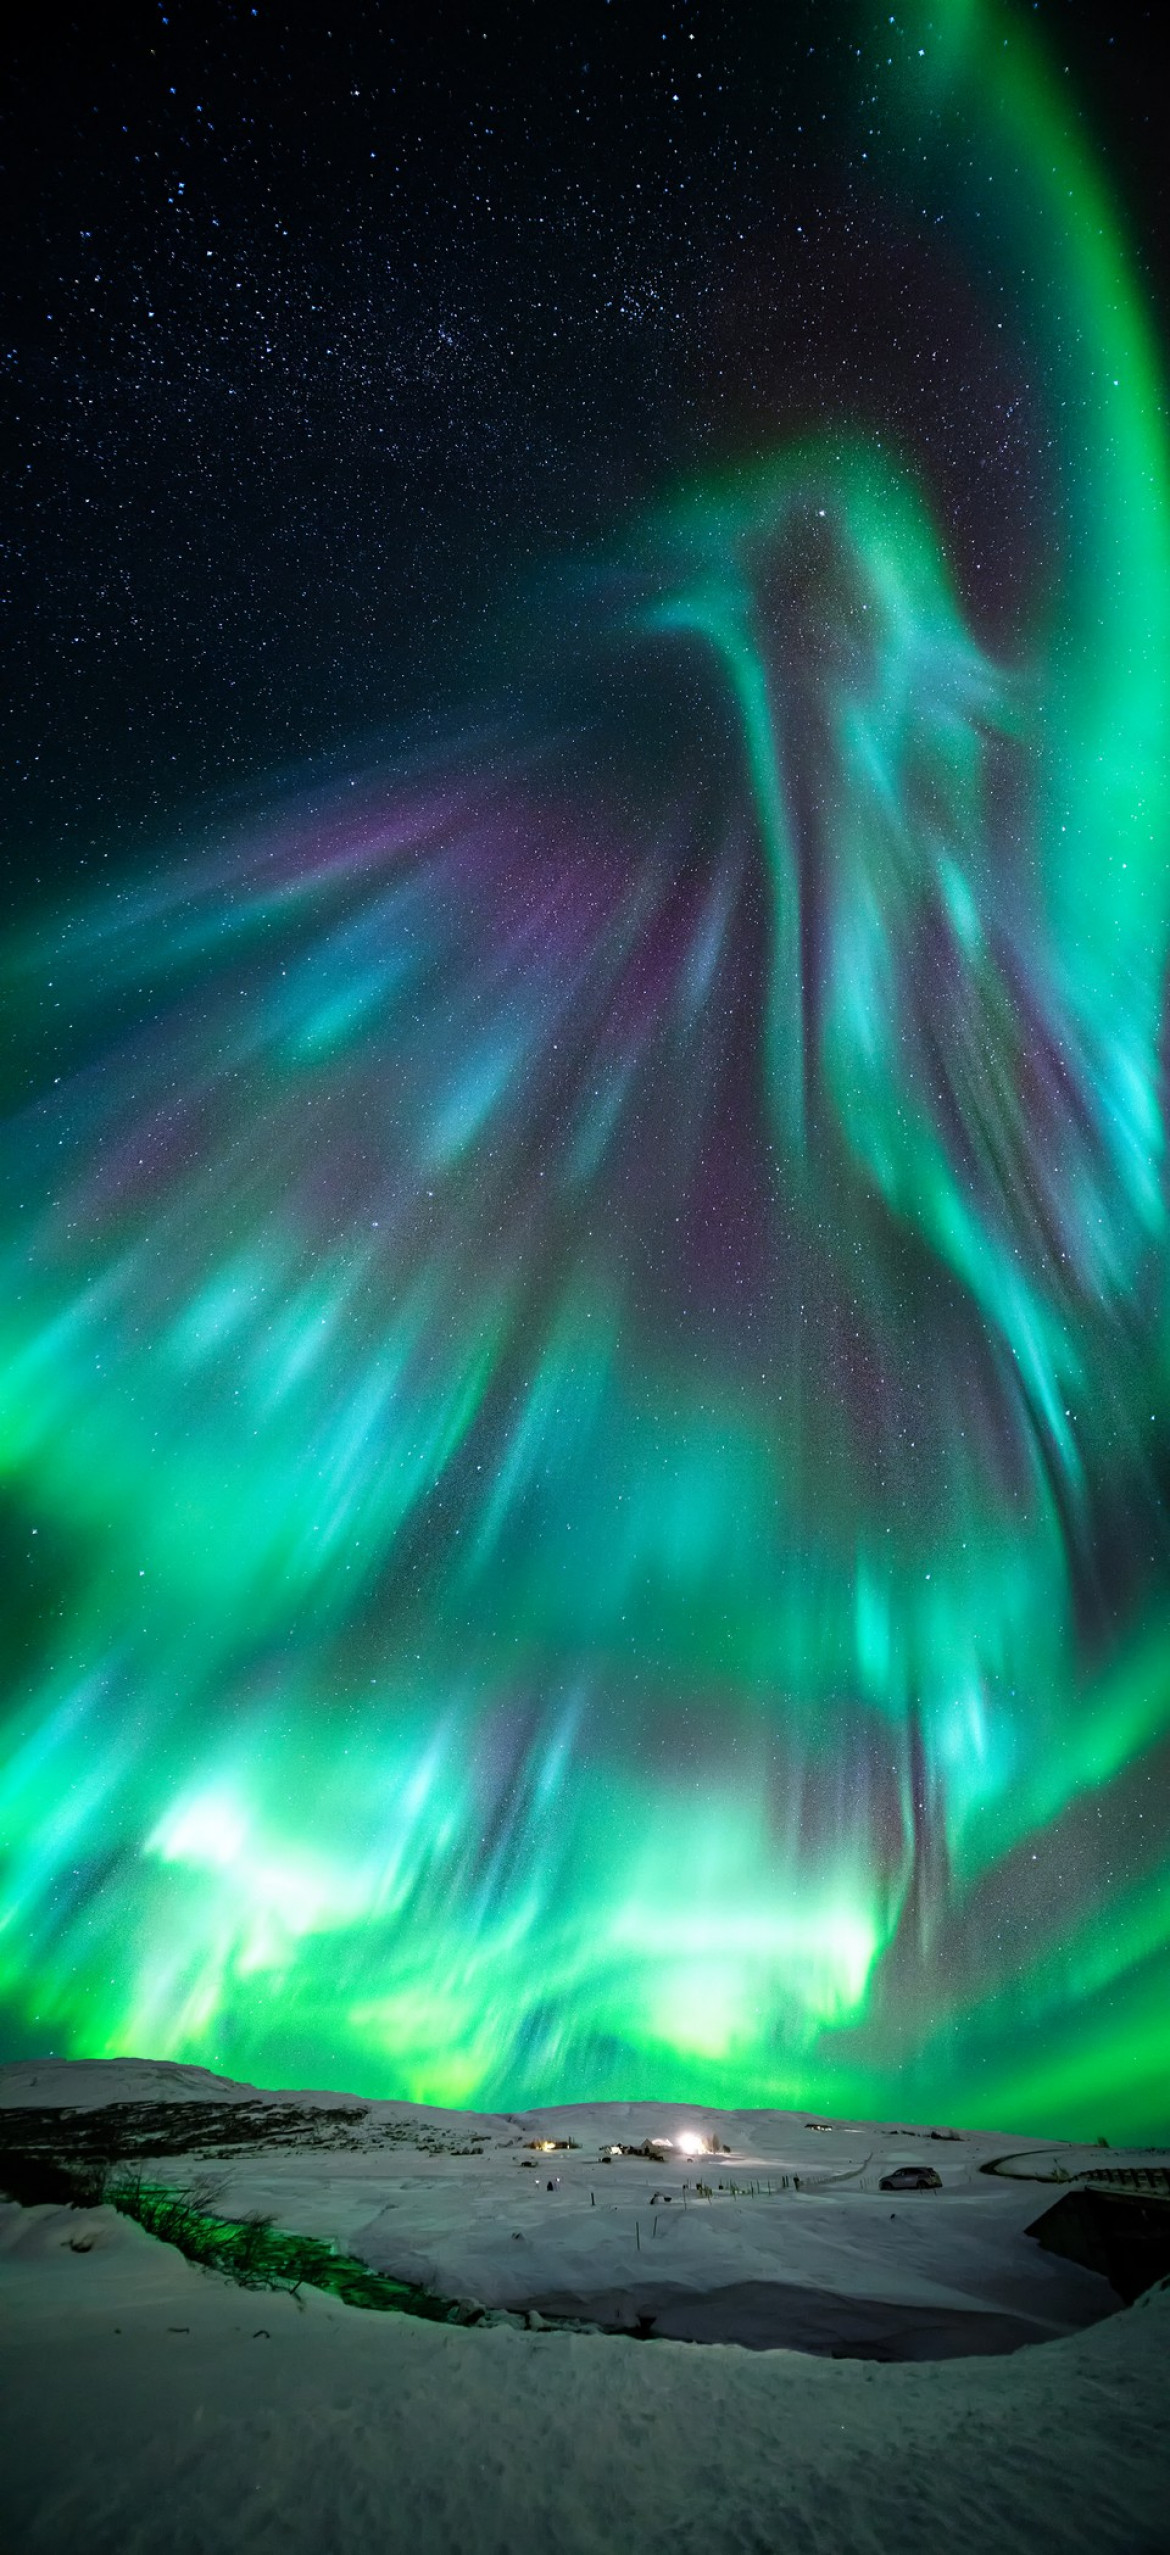 fot. Wang Zheng, "Aurora like Phoenix" / Insight Investment Astronomy Photographer of the Year 2019